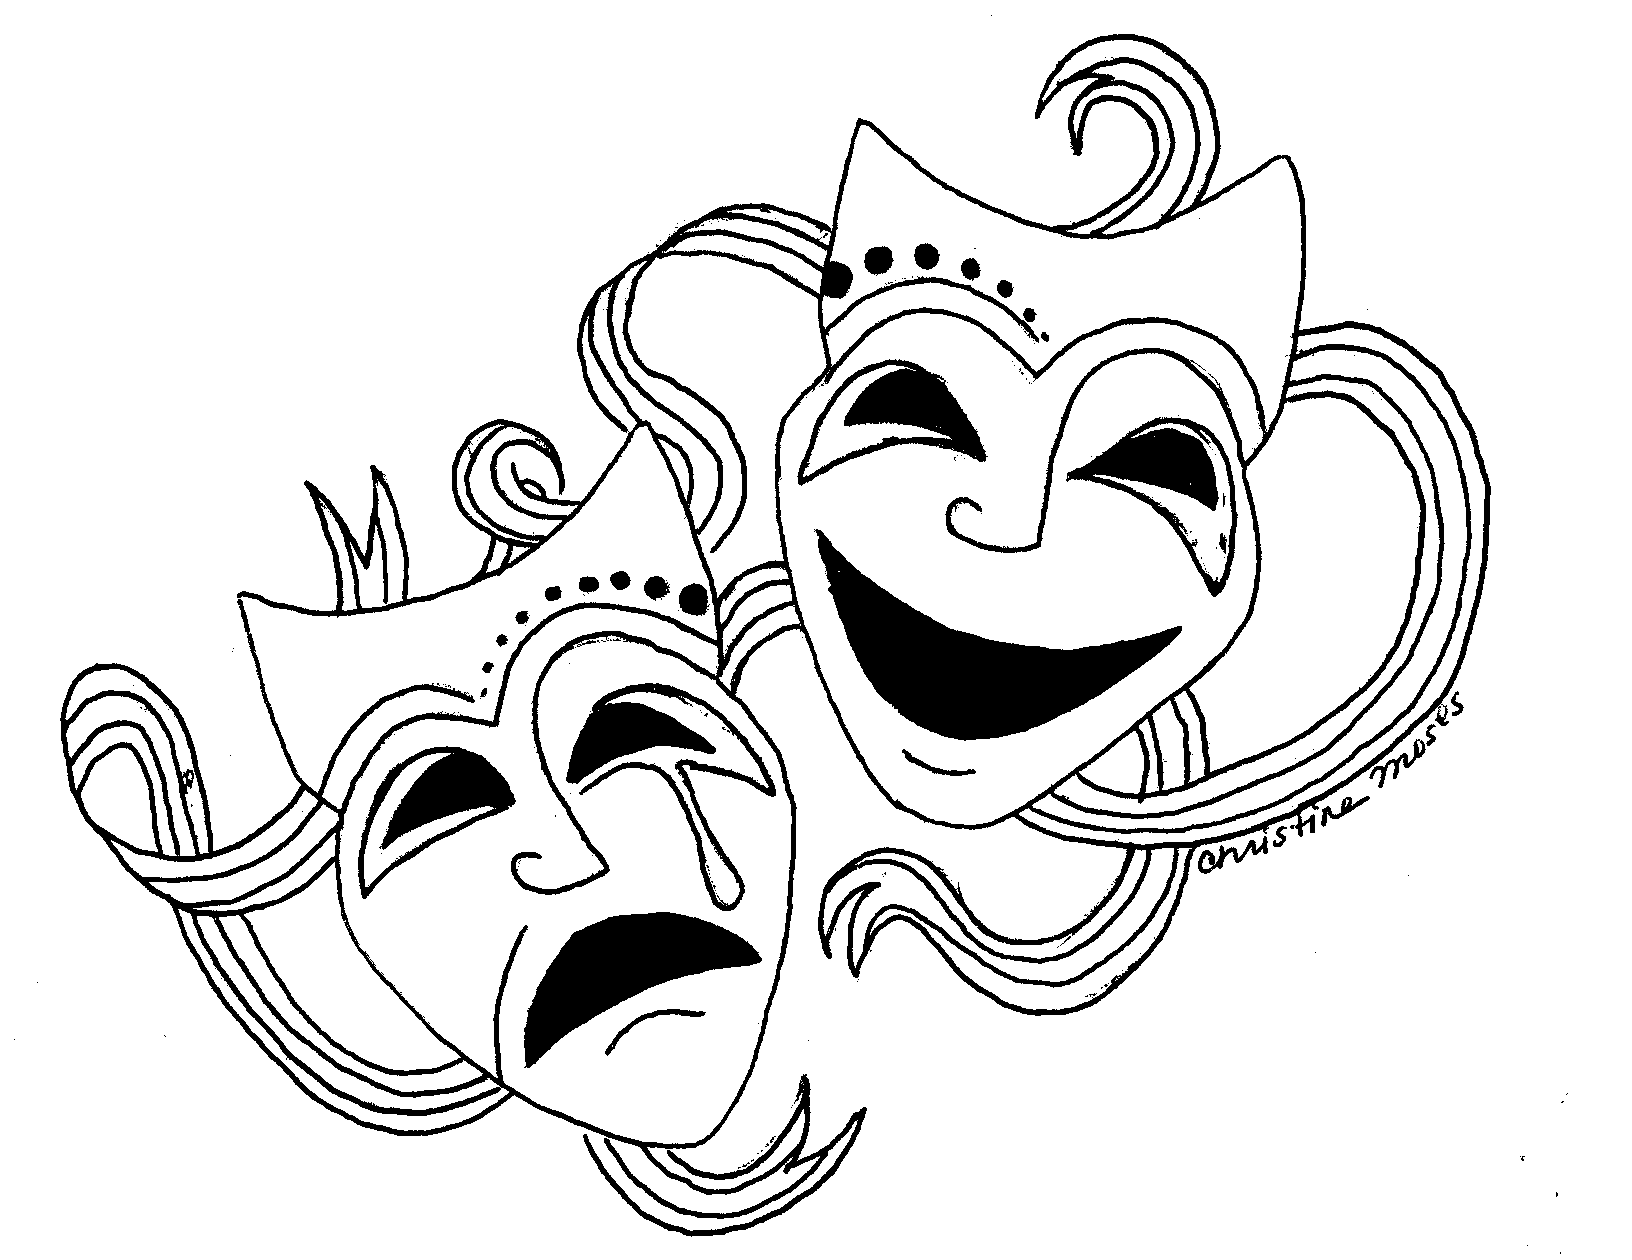 Comedy Tragedy Masks | Rogue News Online